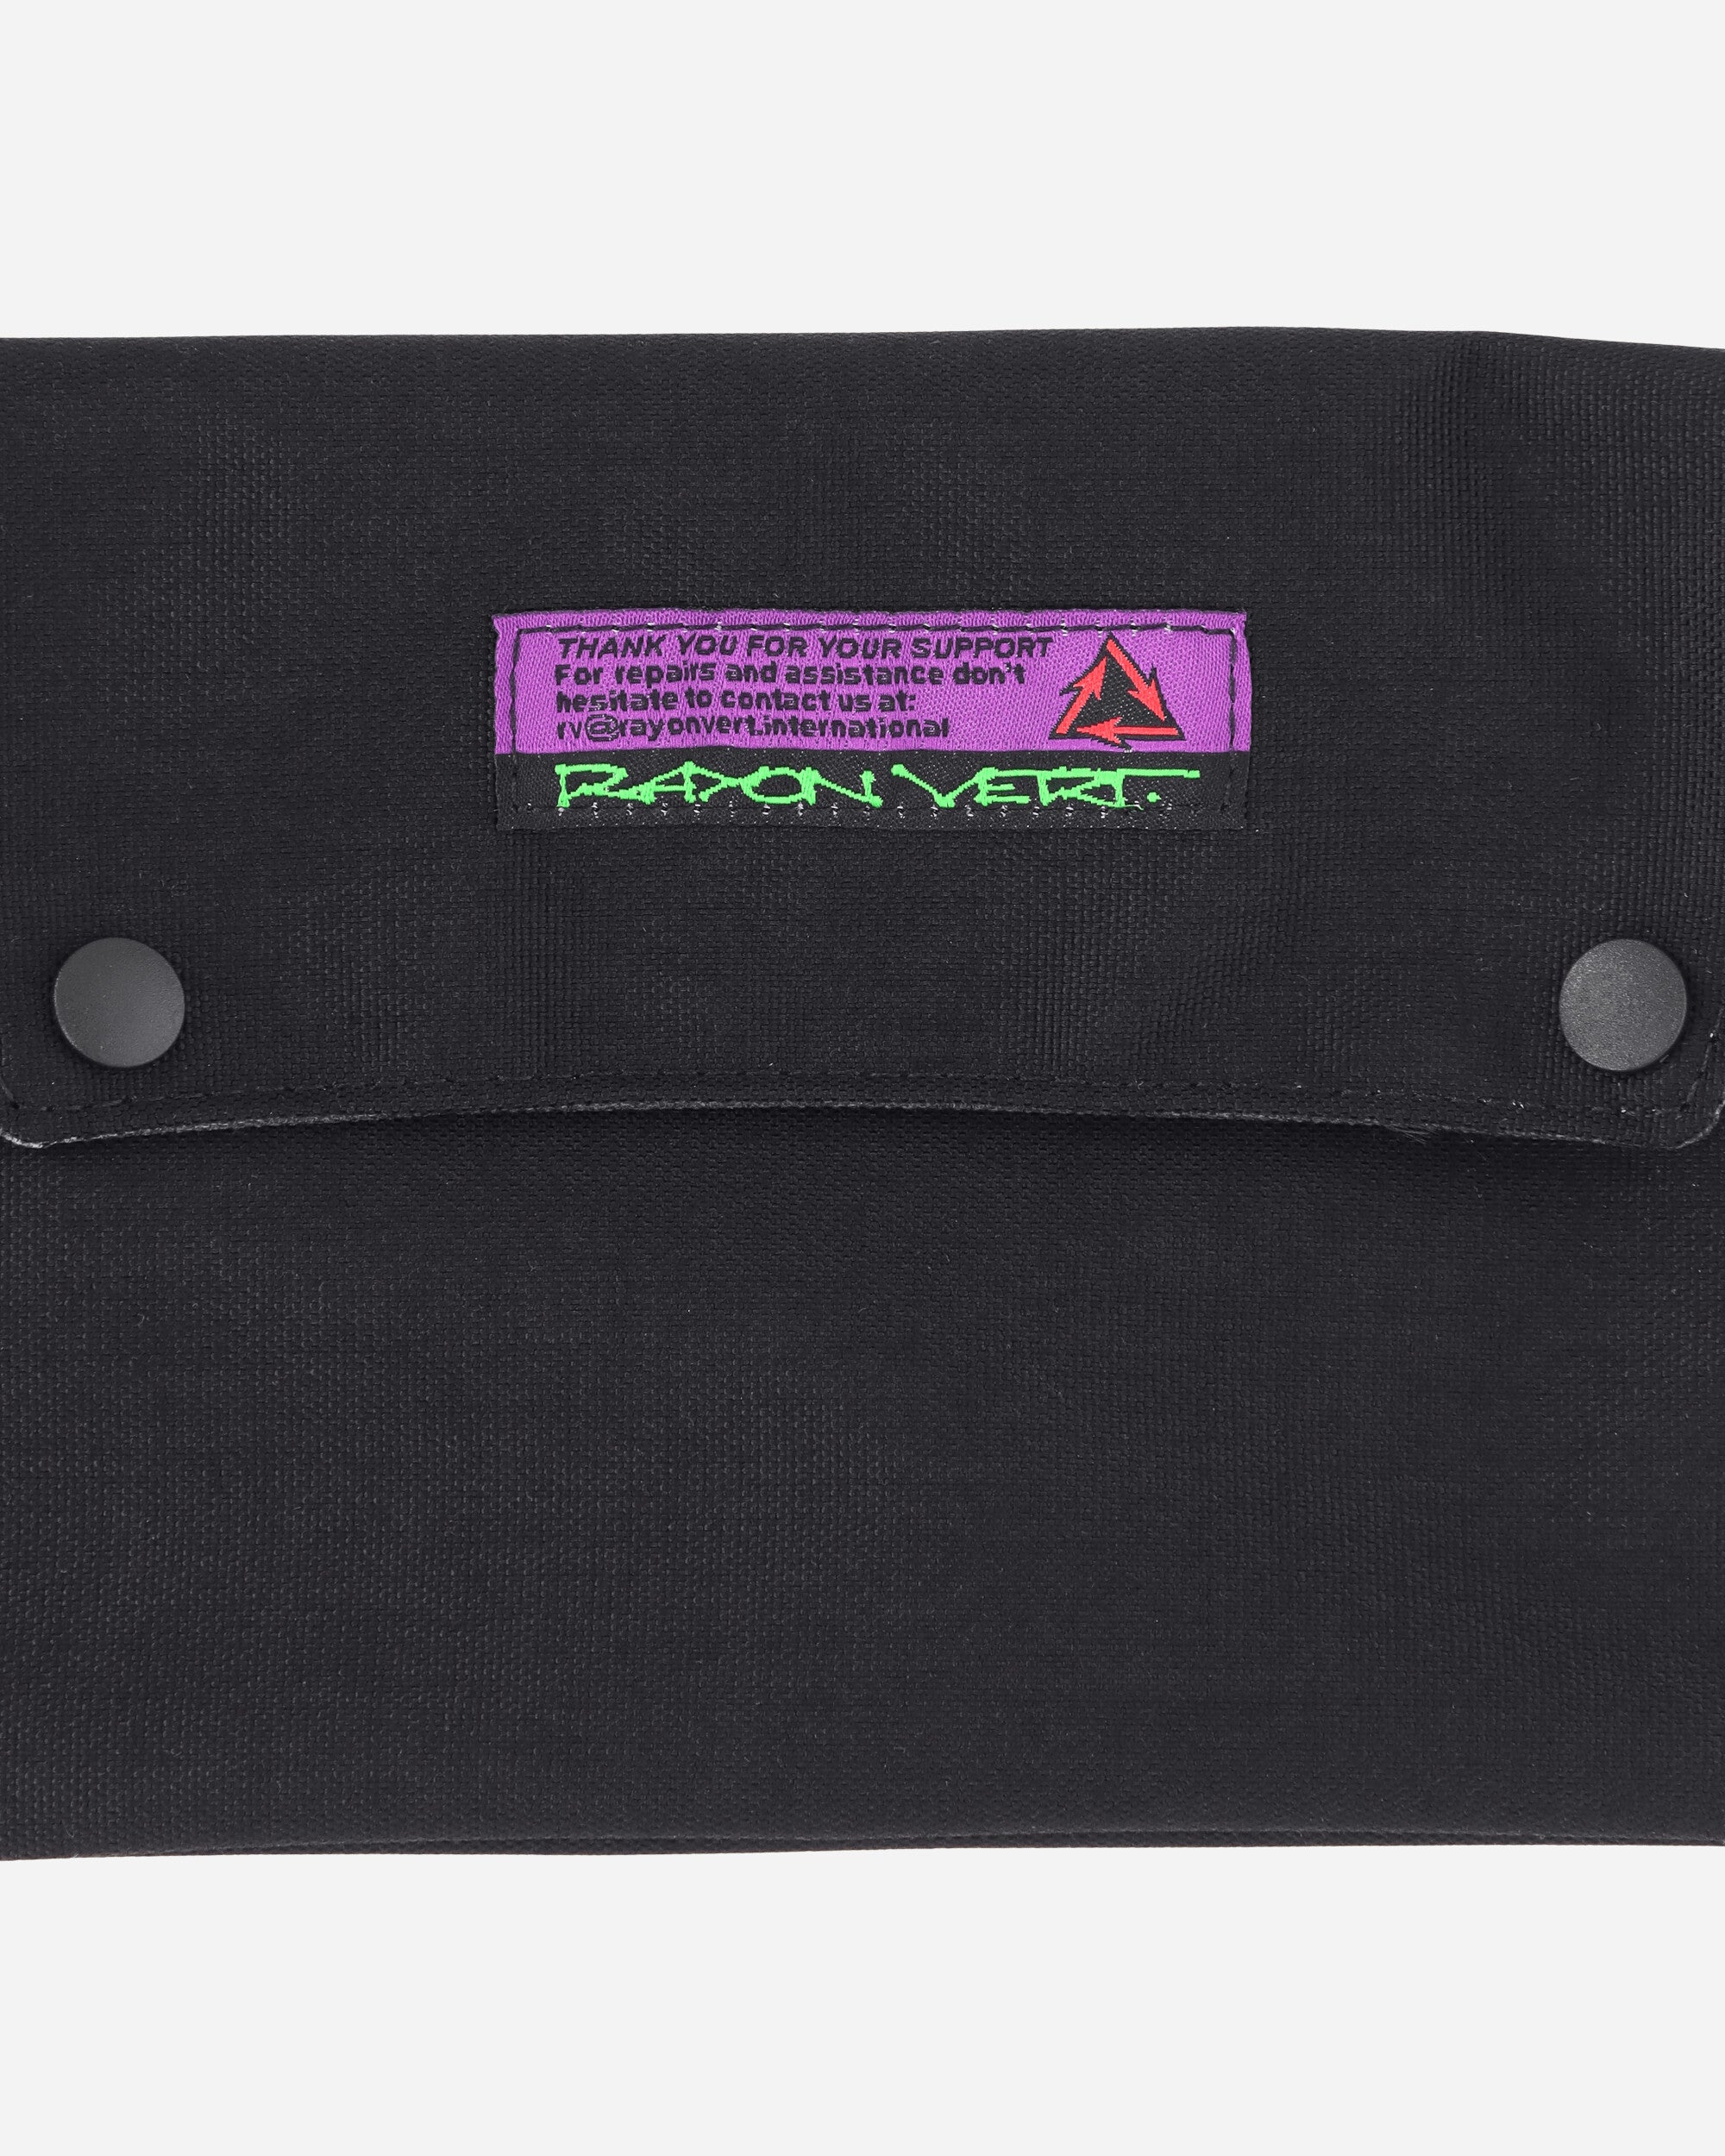 Rayon Vert Internship Sacoche Cordura Black Bags and Backpacks Pouches RVS3-BG40 1